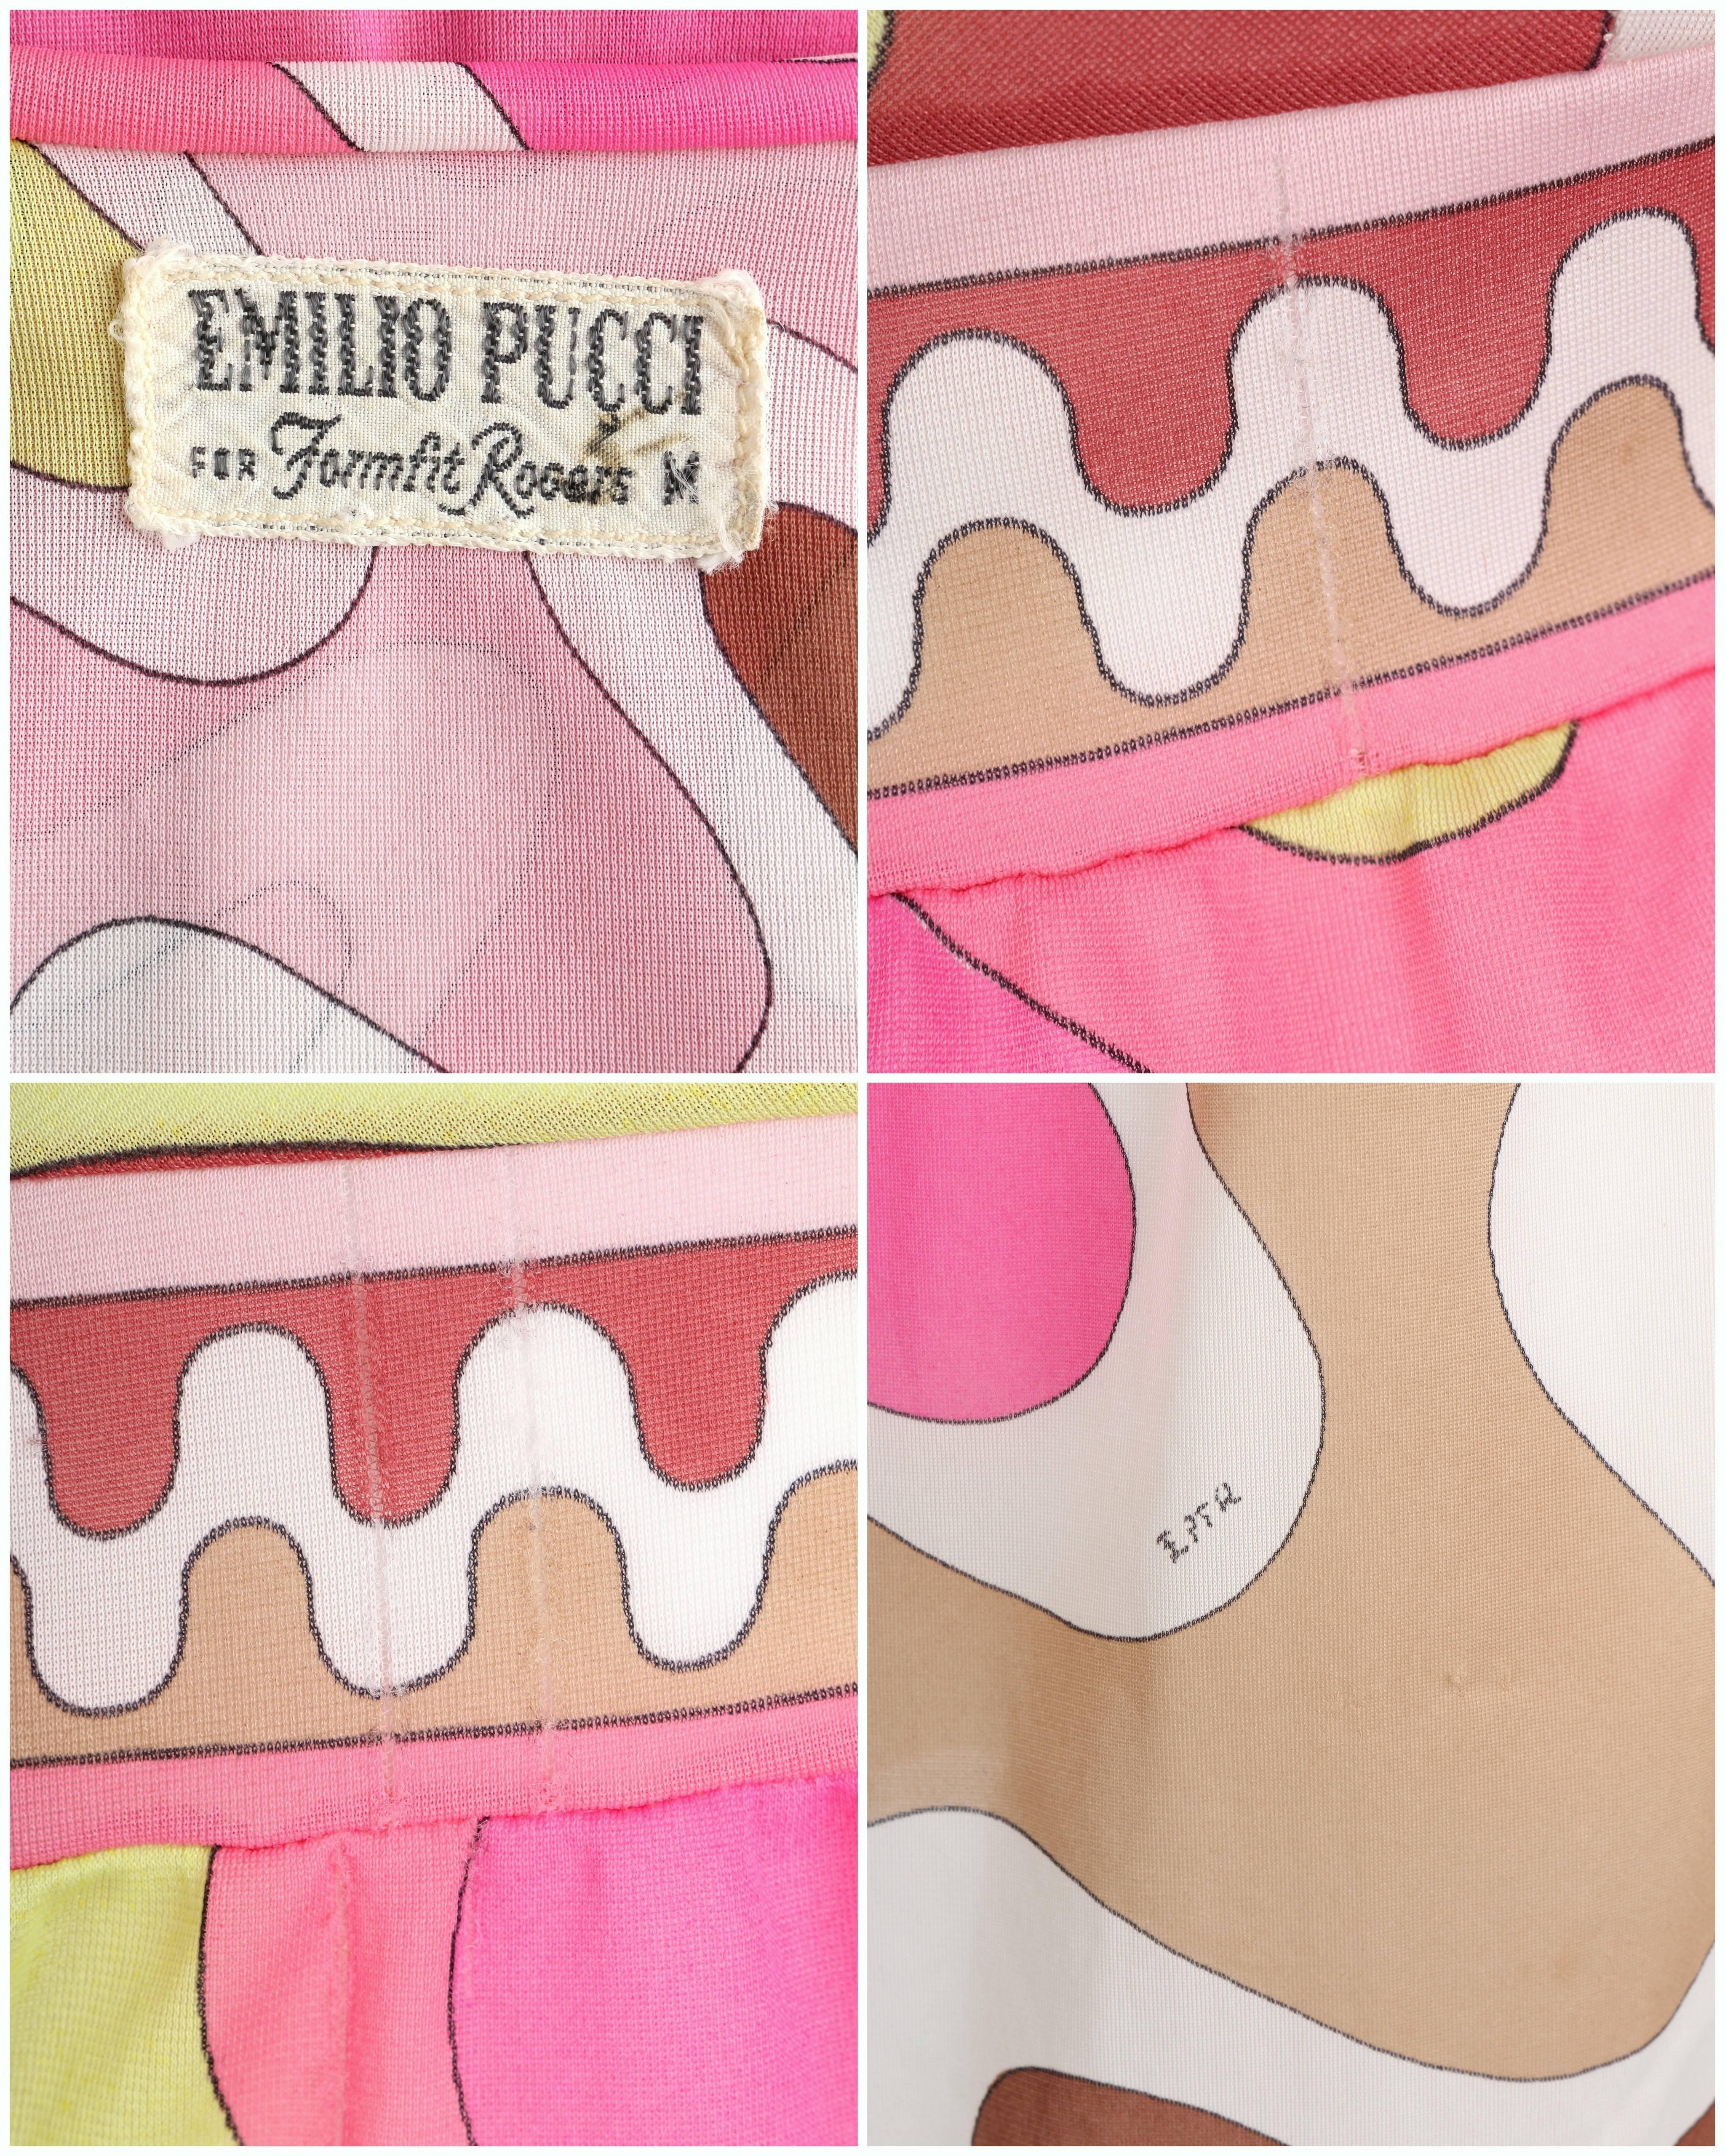 EMILIO PUCCI c.1960's Formfit Rogers Pink Multicolor Wave Print Top Camisole 6